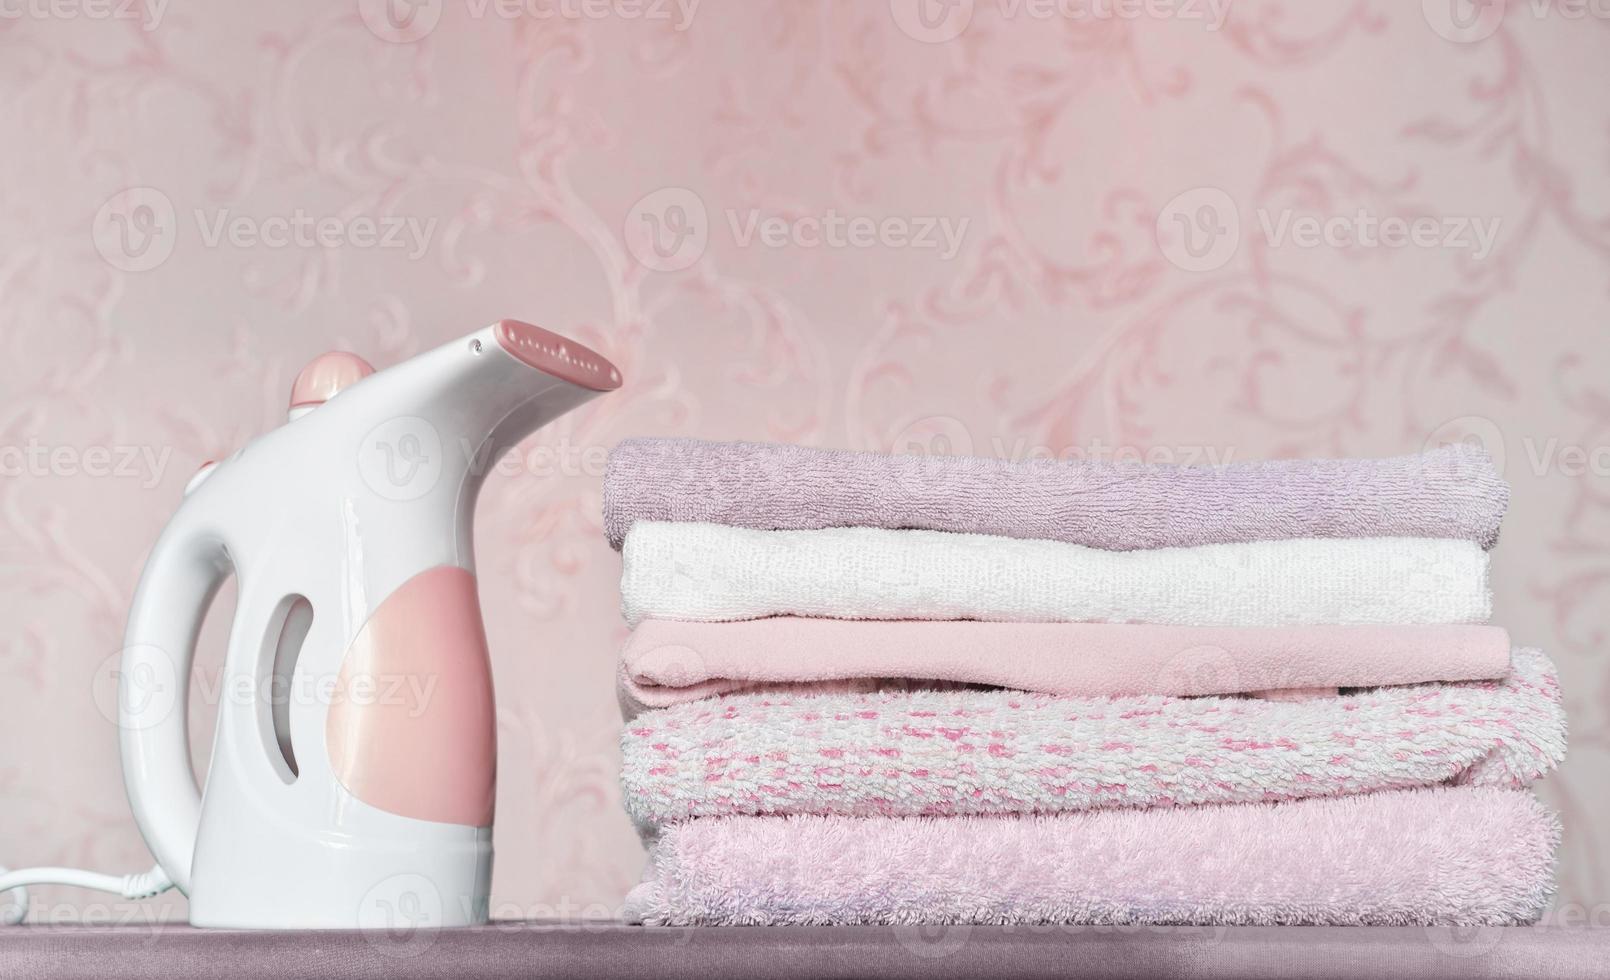 vaporizador de roupa elétrico portátil e pilha de toalhas dobradas na tábua de passar roupa. limpeza e agregado familiar, conceito de tarefas. roupas rosa e lilás. foto